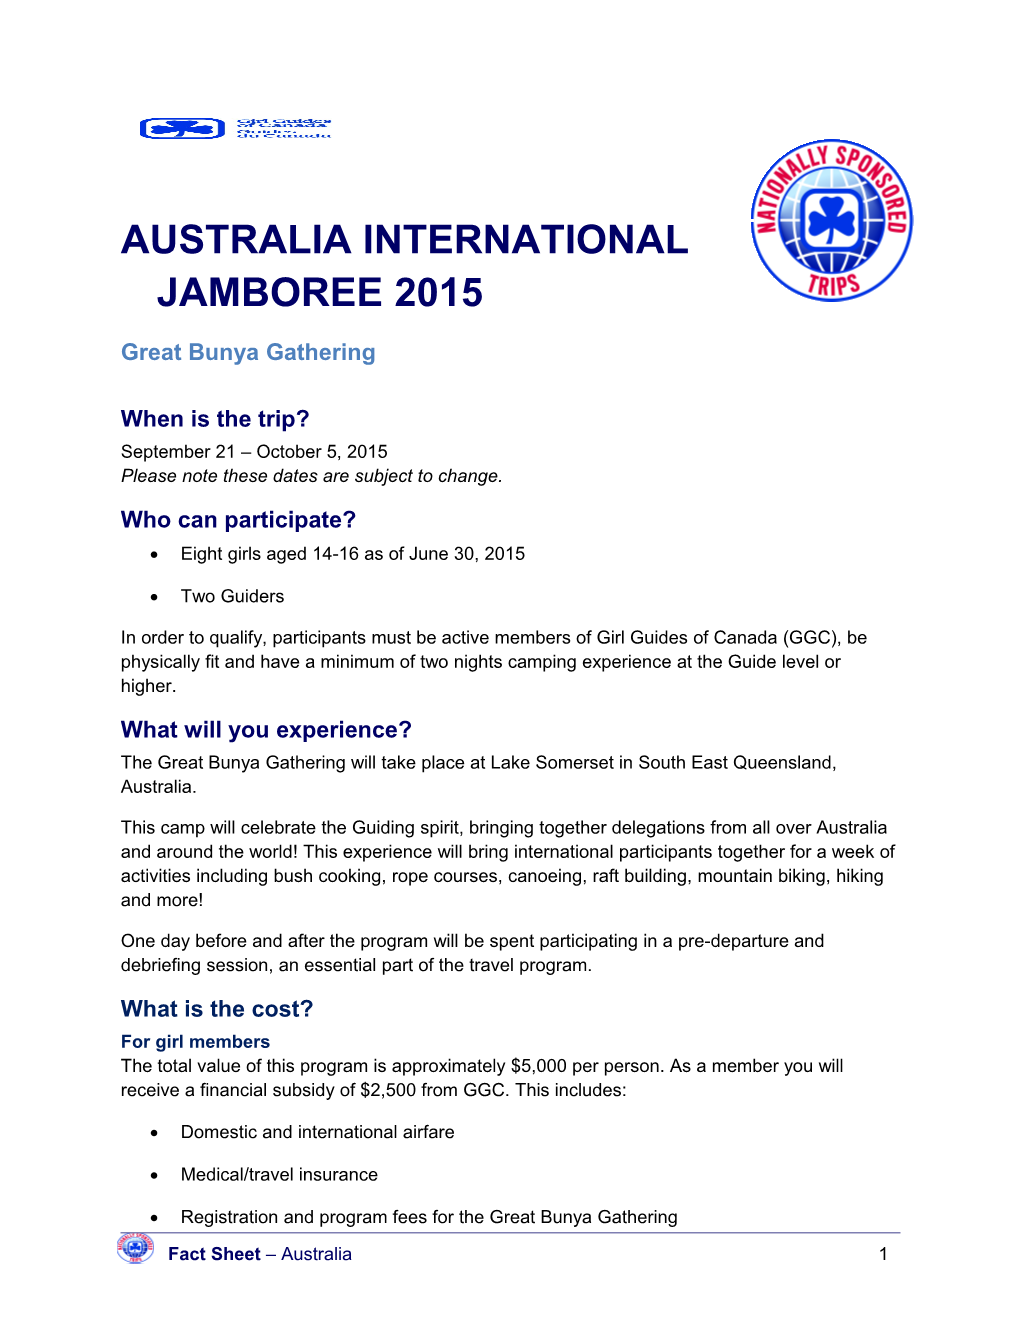 Australia International Jamboree 2015